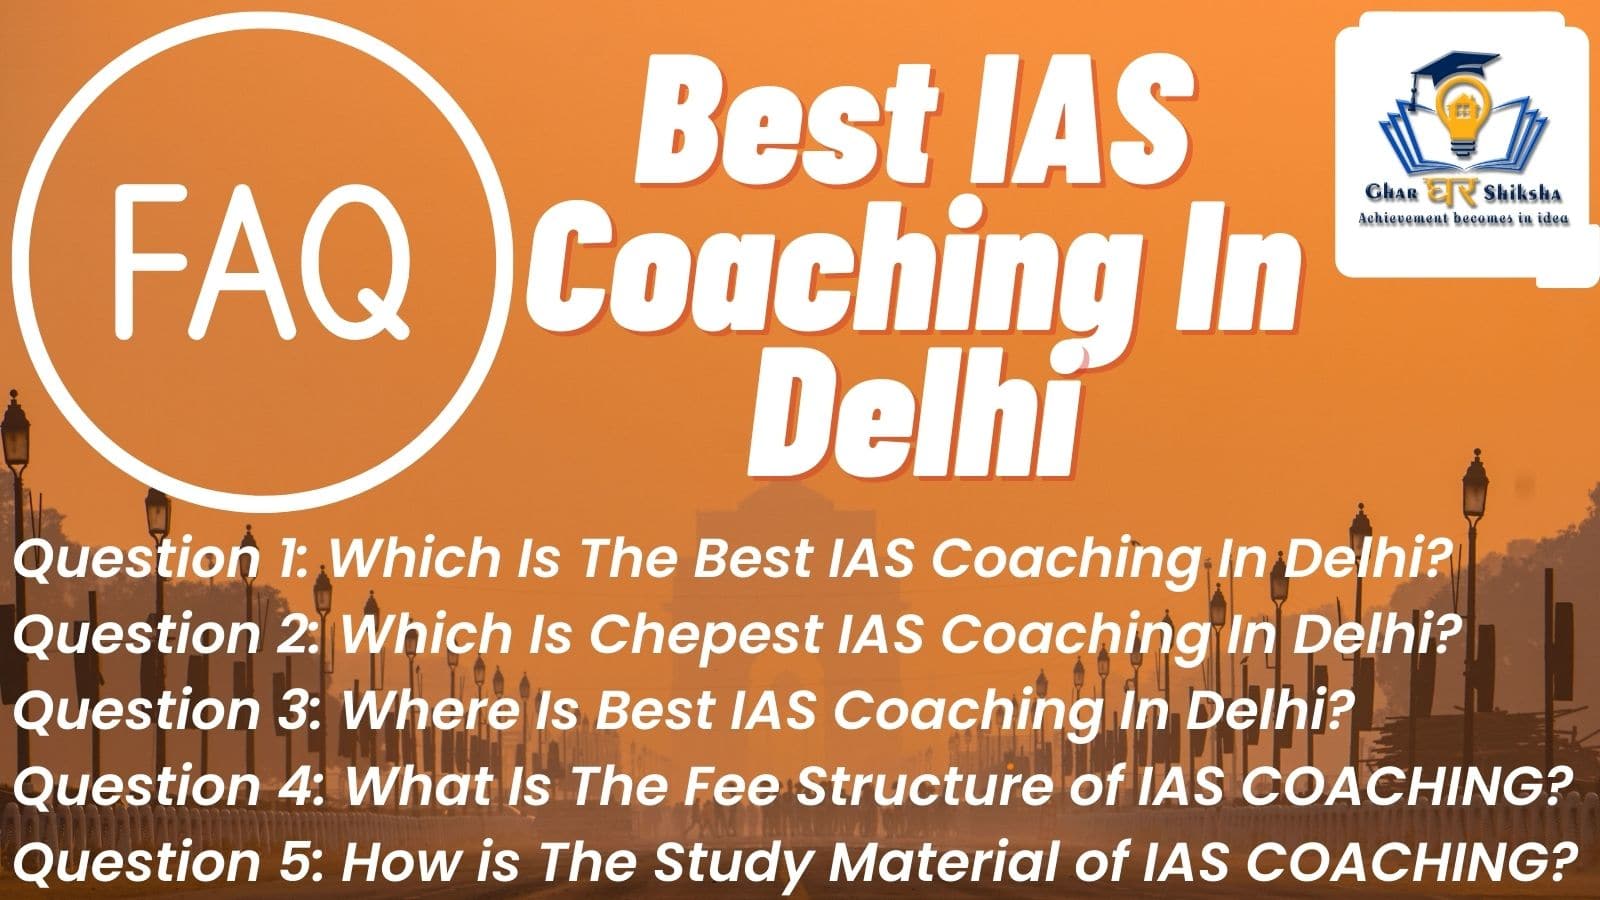 Top IAS Coaching of Delhi